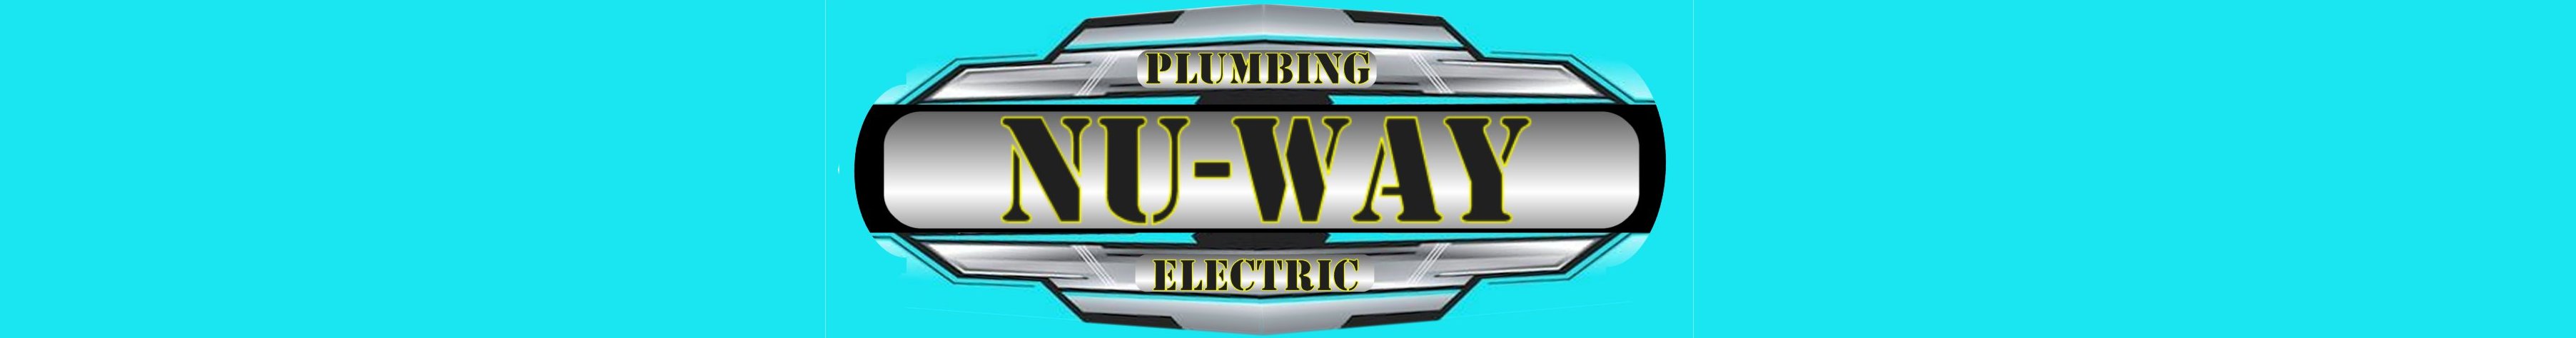 Nu-Way Plumbing and Electric Logo